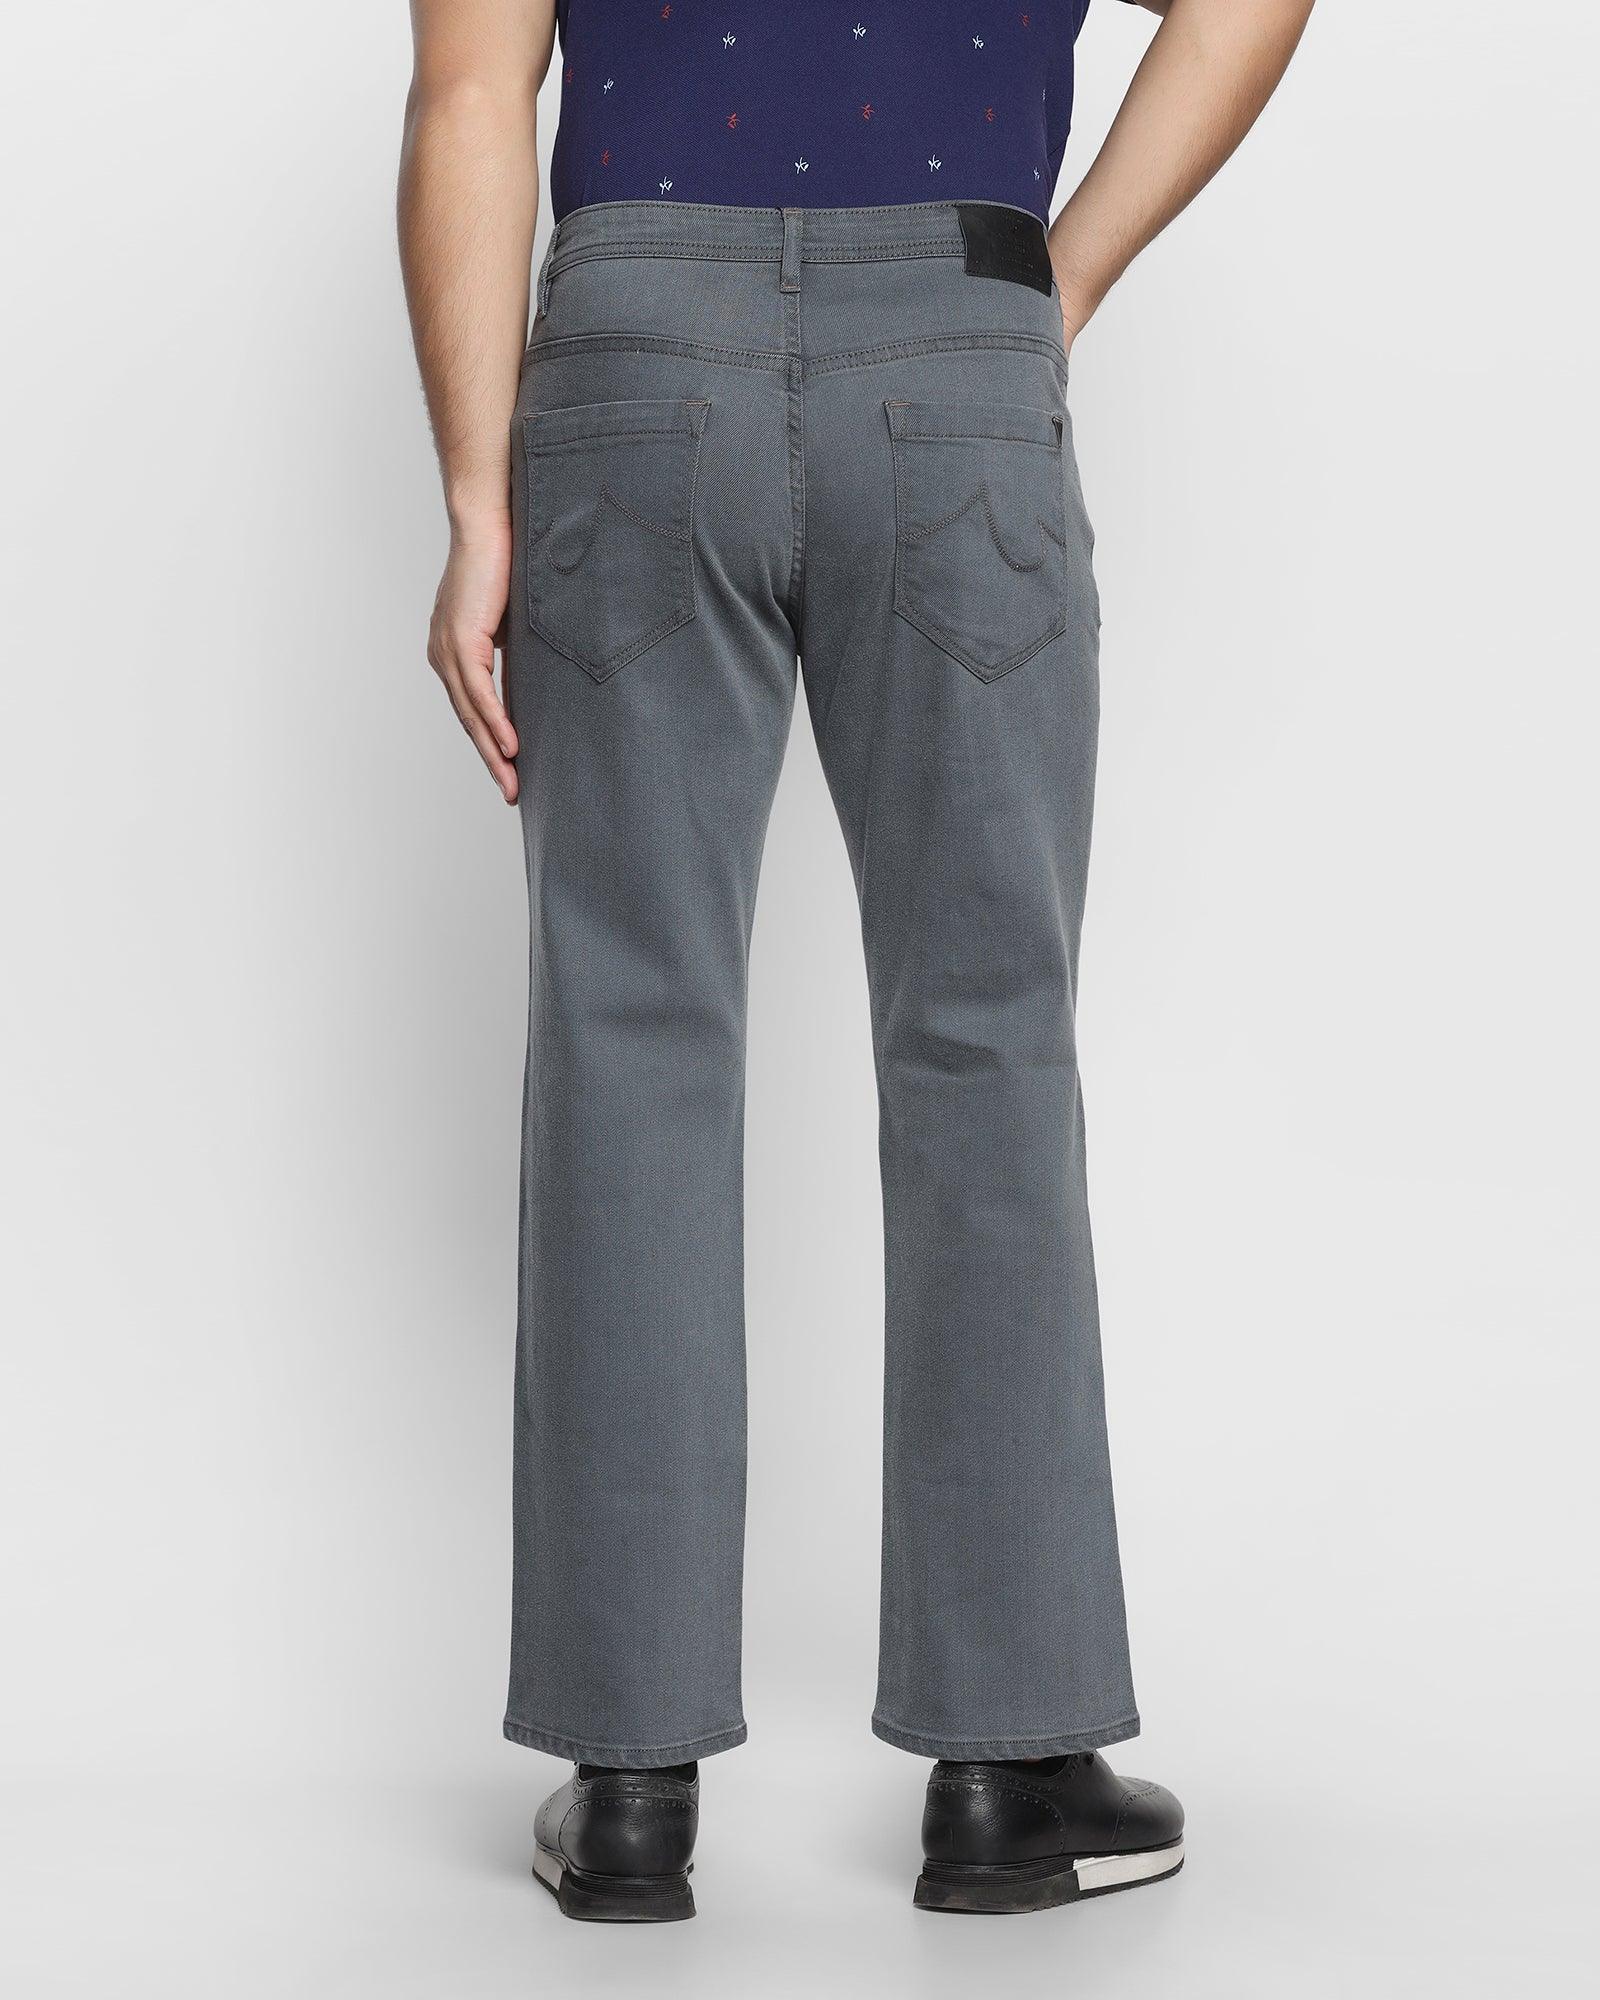 Superflex Straight Comfort Duke Fit Grey Jeans - Bento